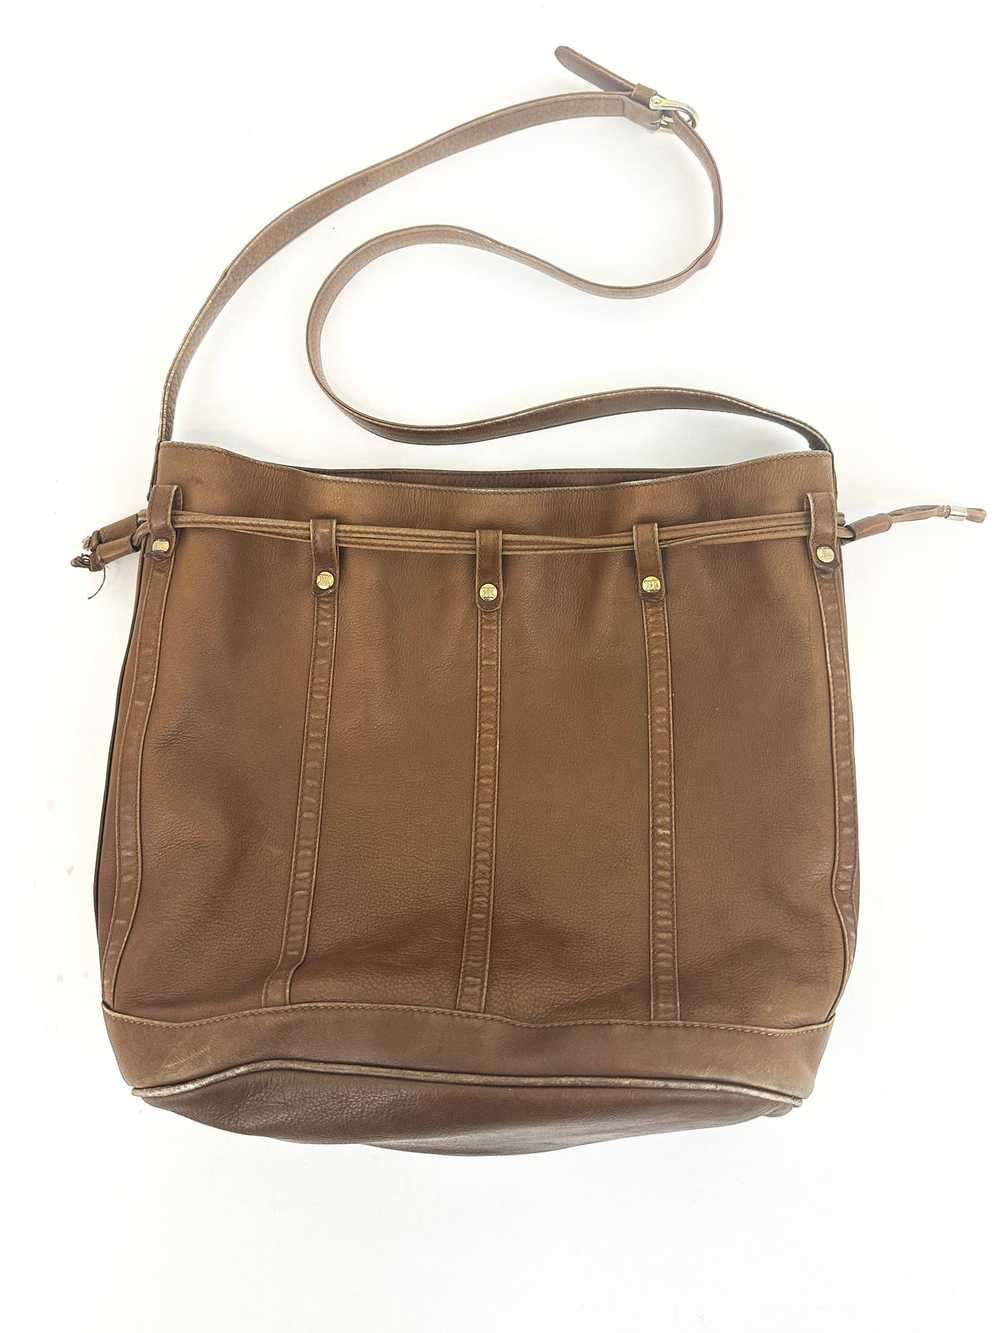 70s Celine Leather Bucket Bag - image 3